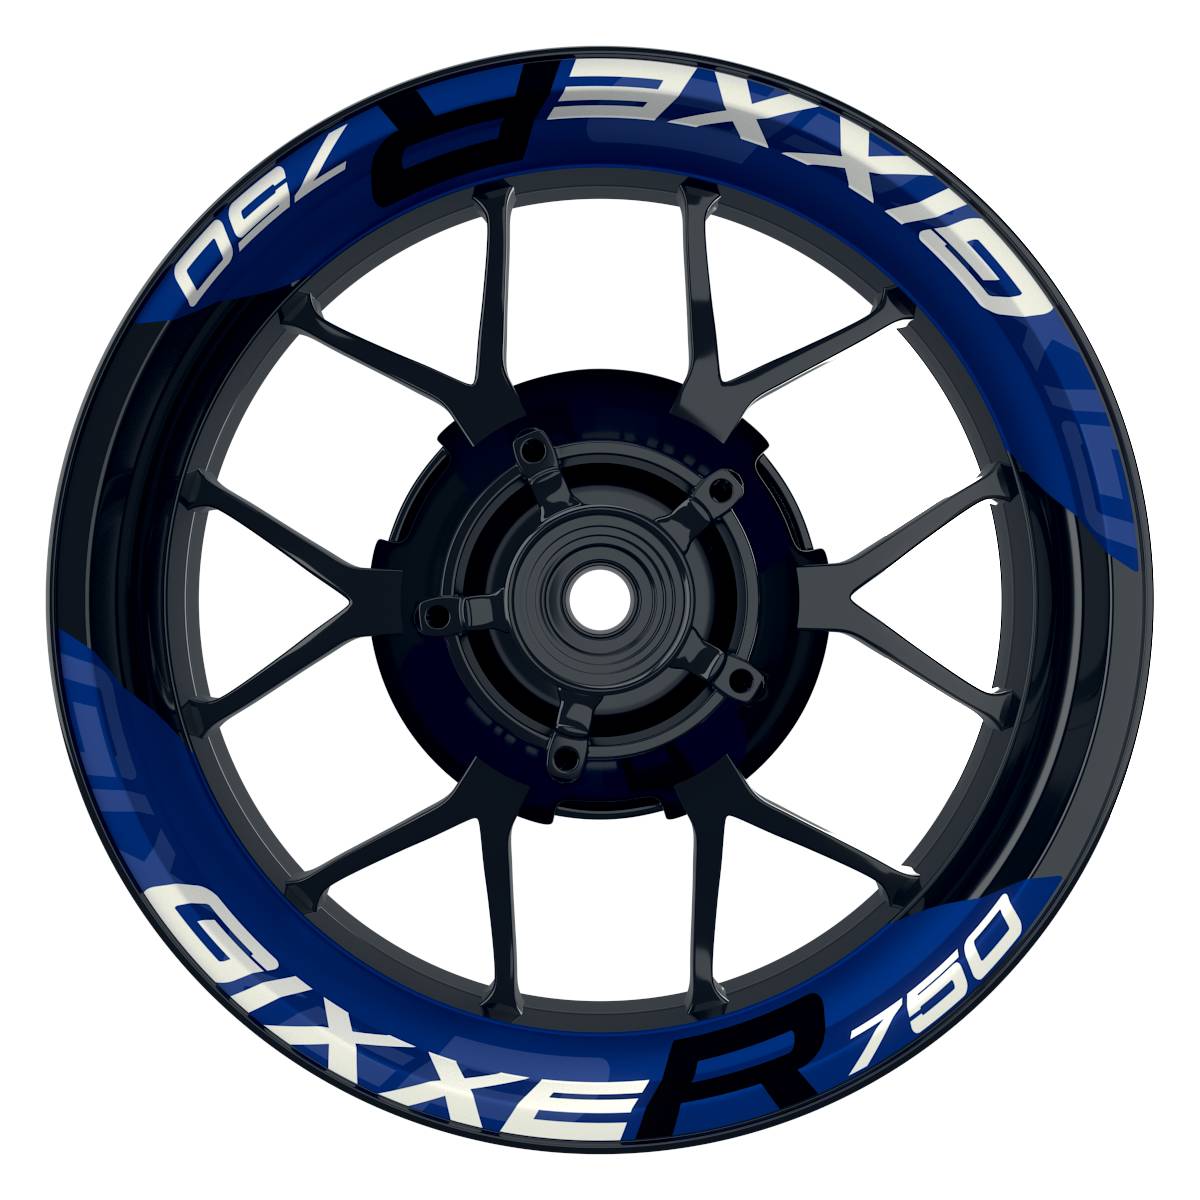 Wheelsticker Felgenaufkleber GIXXER750 einfarbig V2 blau Frontansicht